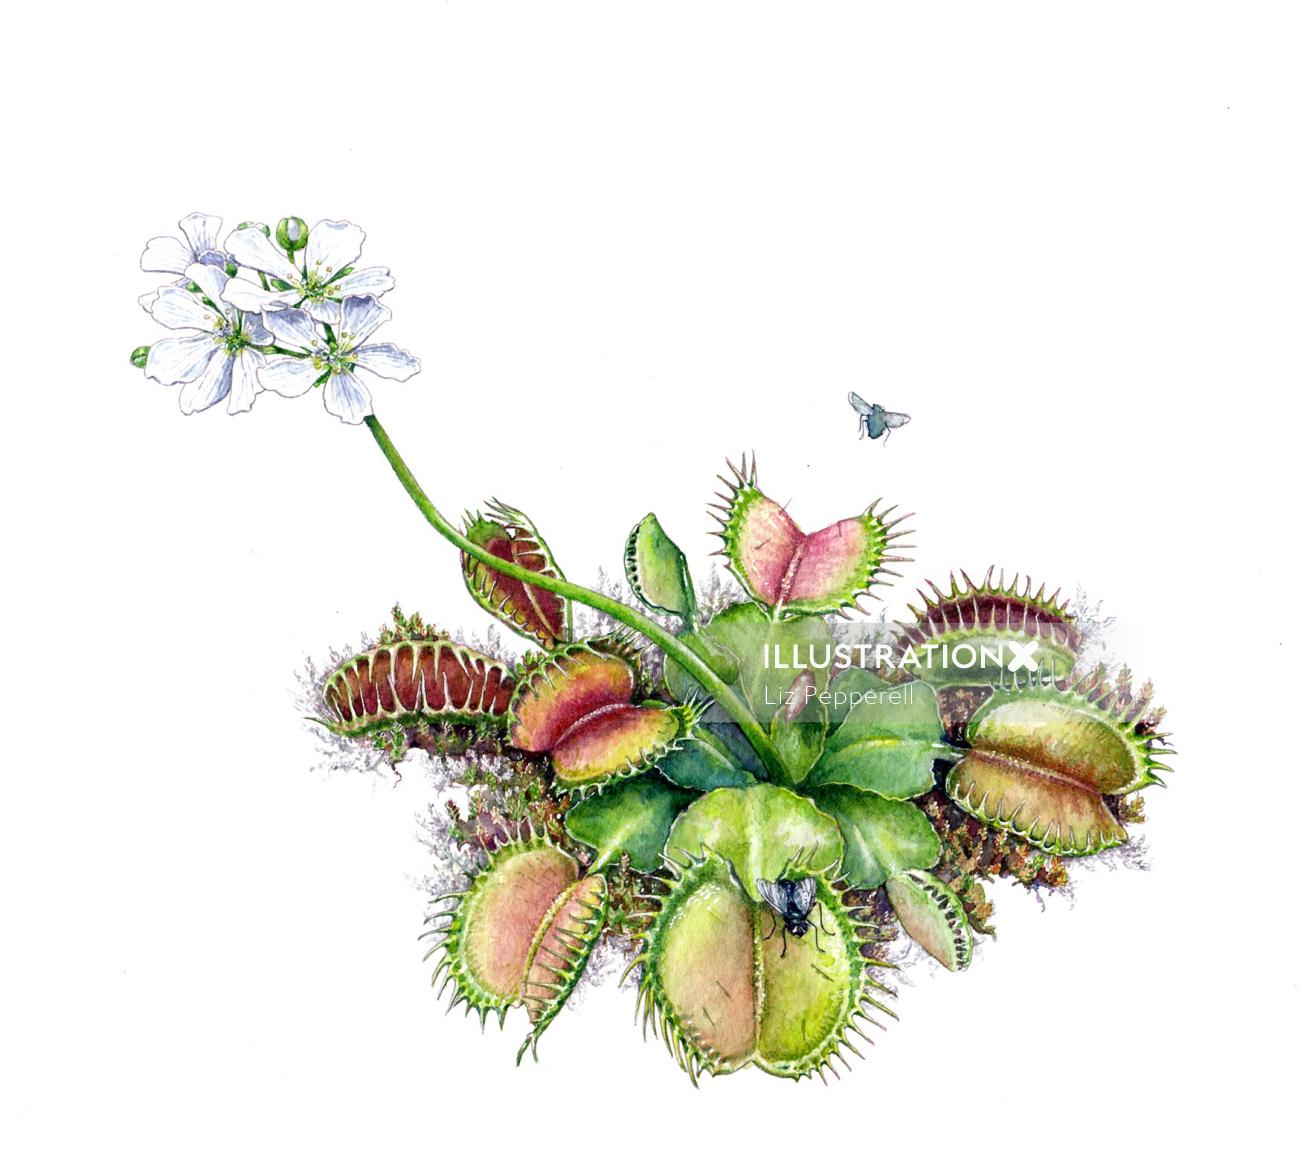 Nature illustration of Venus flytrap plant 